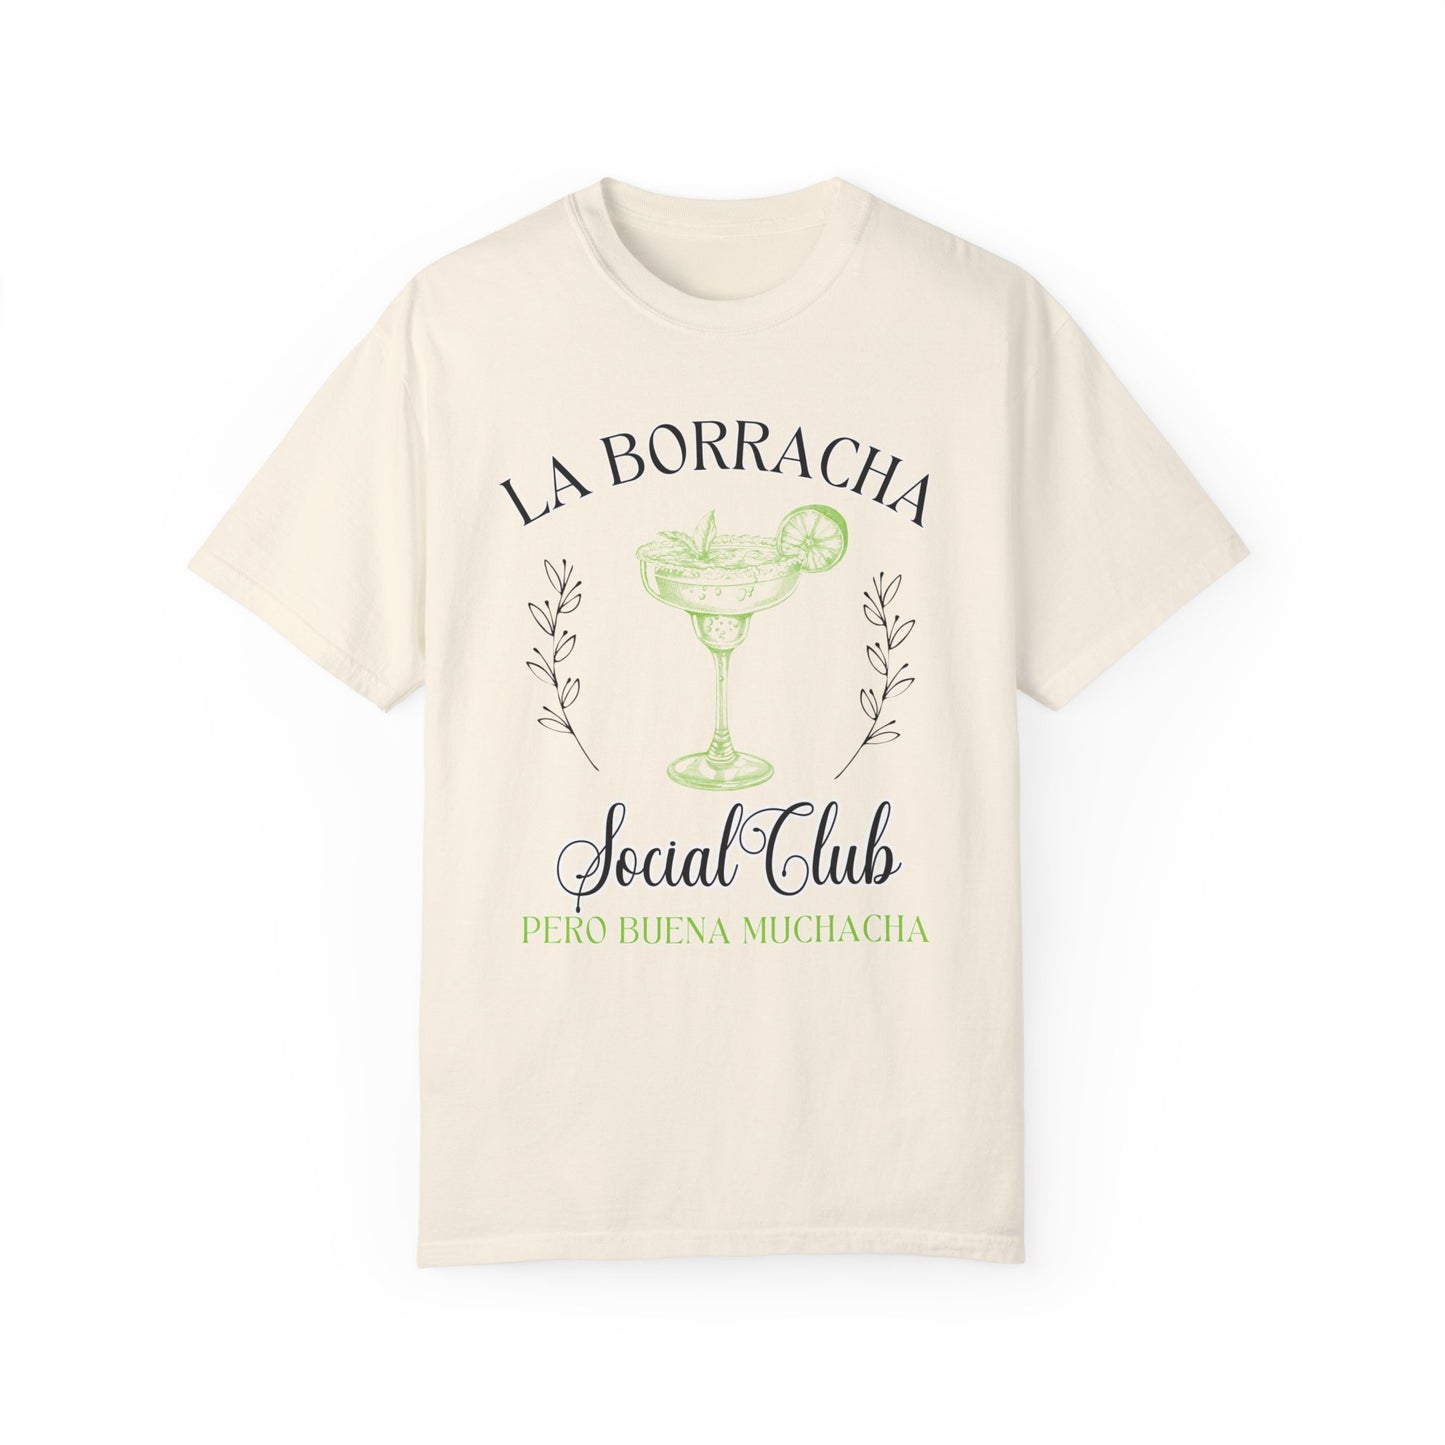 Borracha Social Club T-shirt Pero Buenas Muchachas